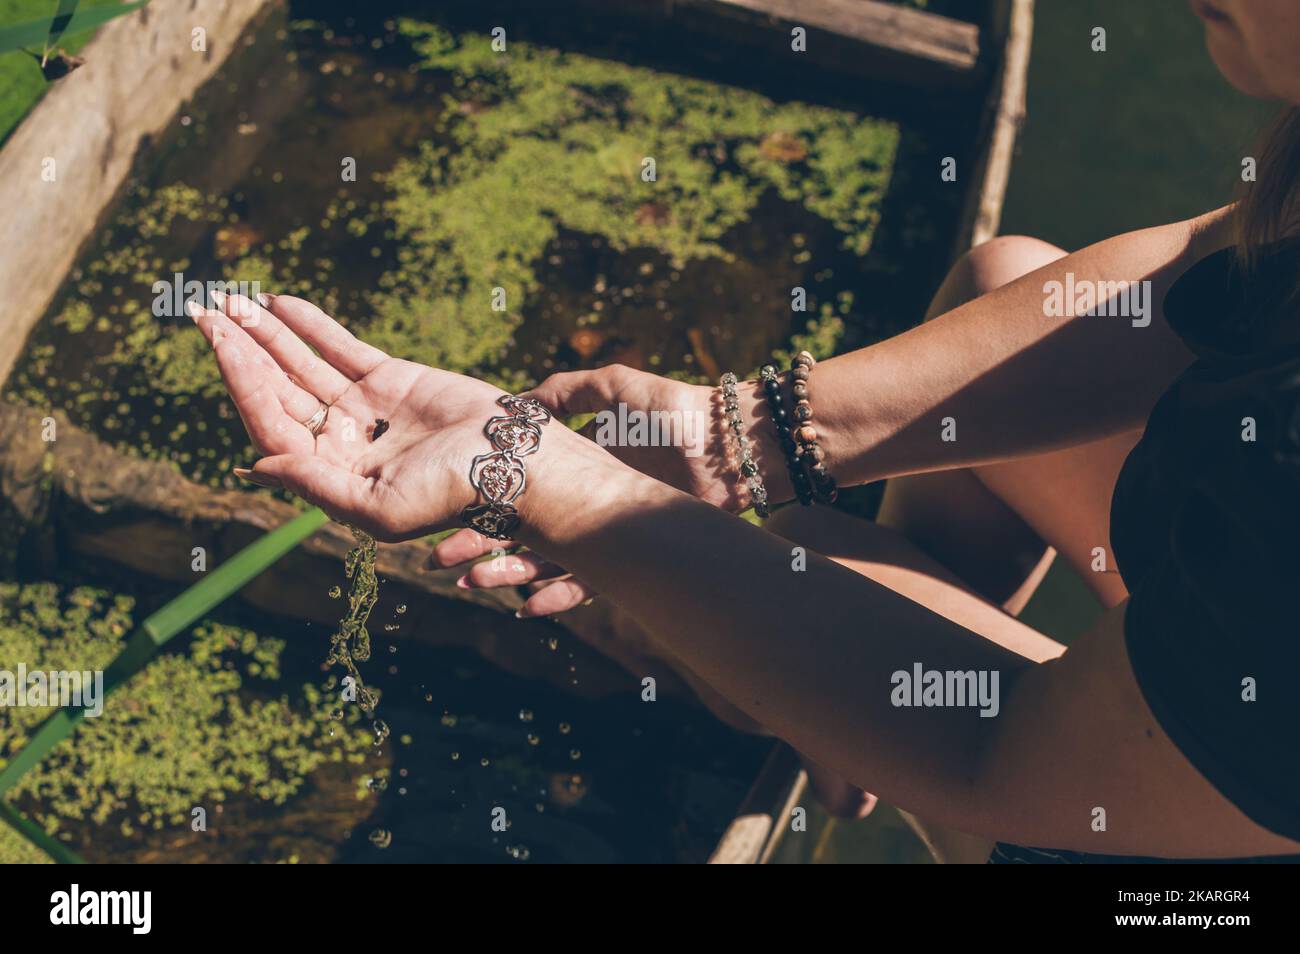 Little snail in woman's hands with bracelets in sunlight Stock Photo